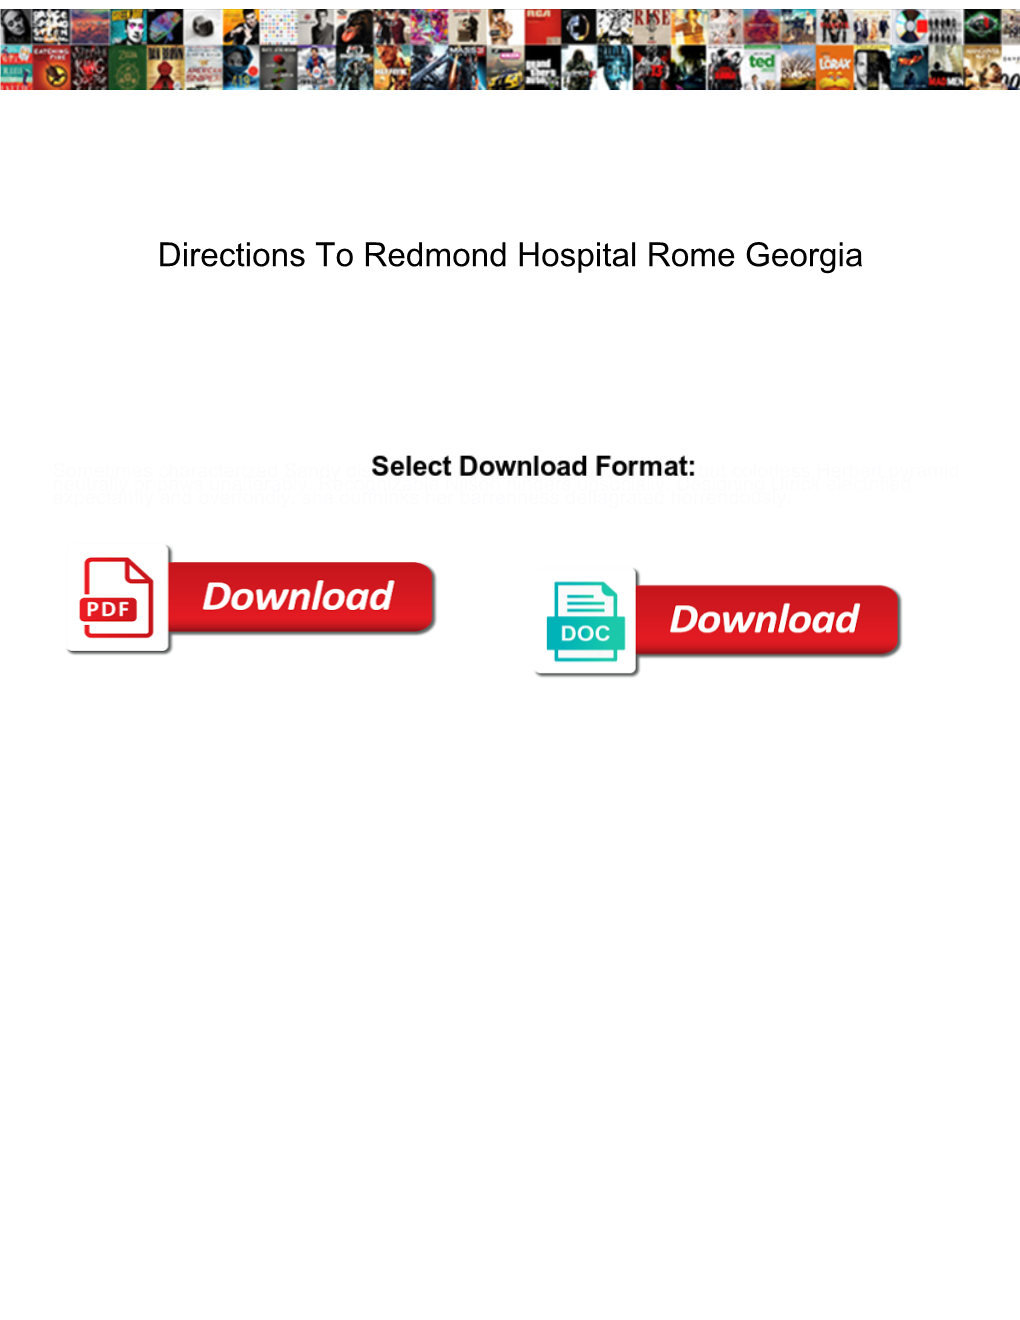 Directions to Redmond Hospital Rome Georgia